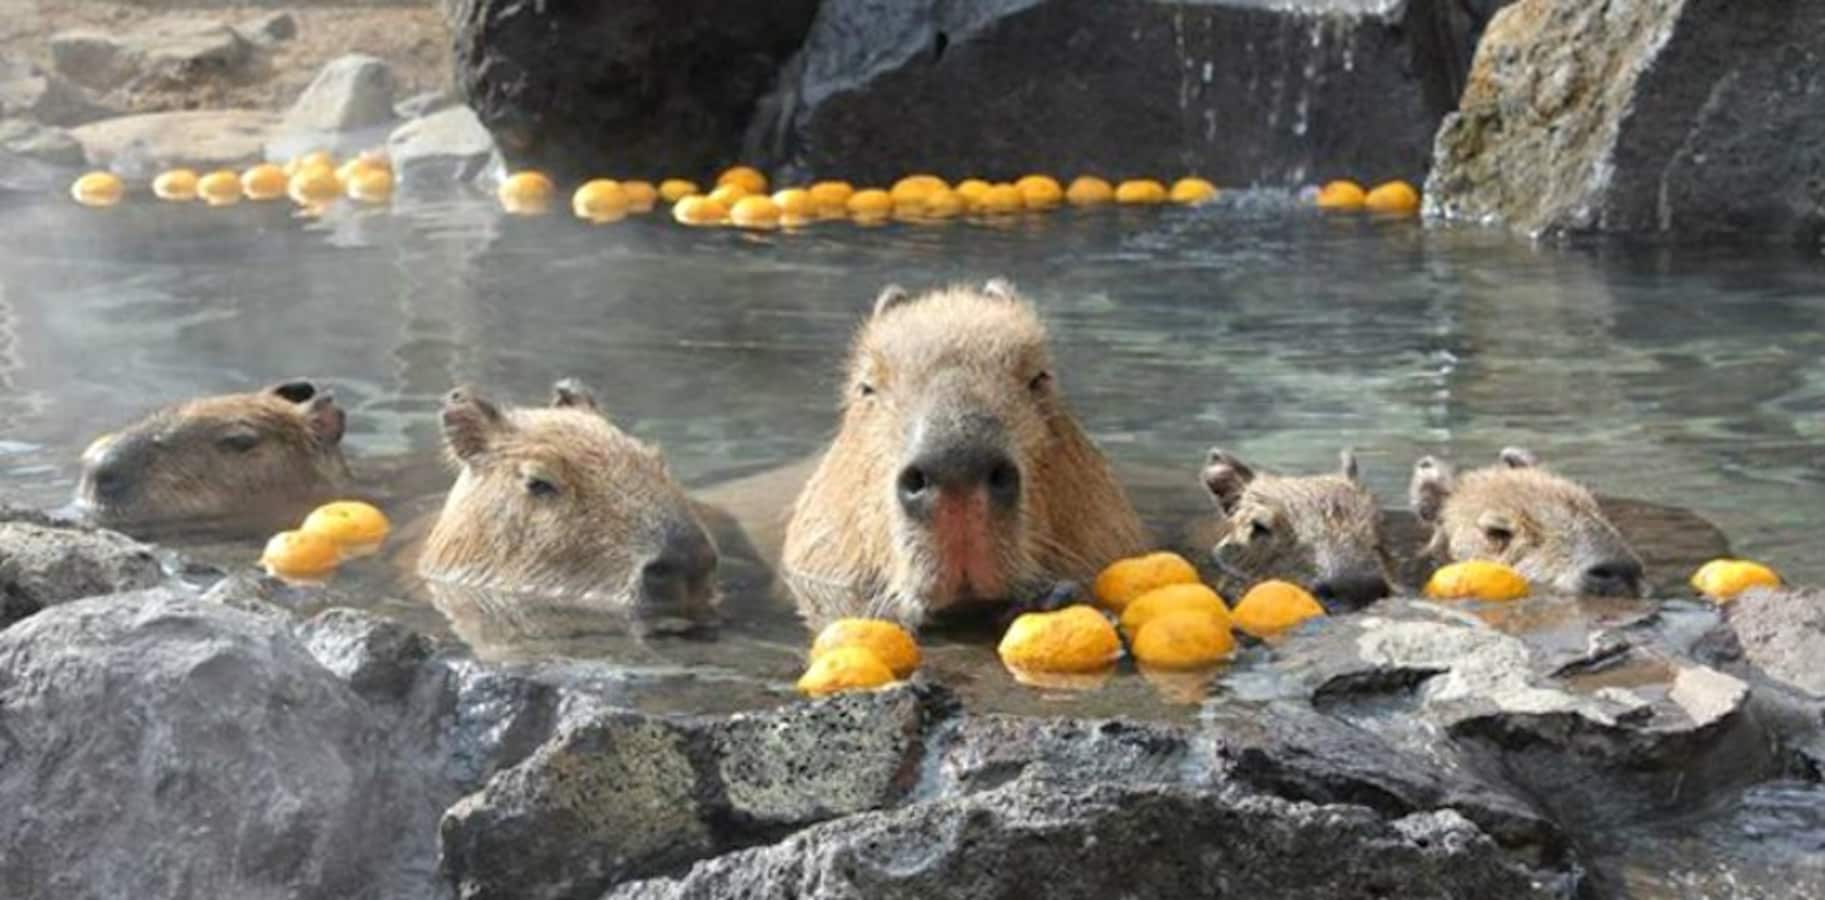 Adorable Capybara Hot Springs | All About Japan